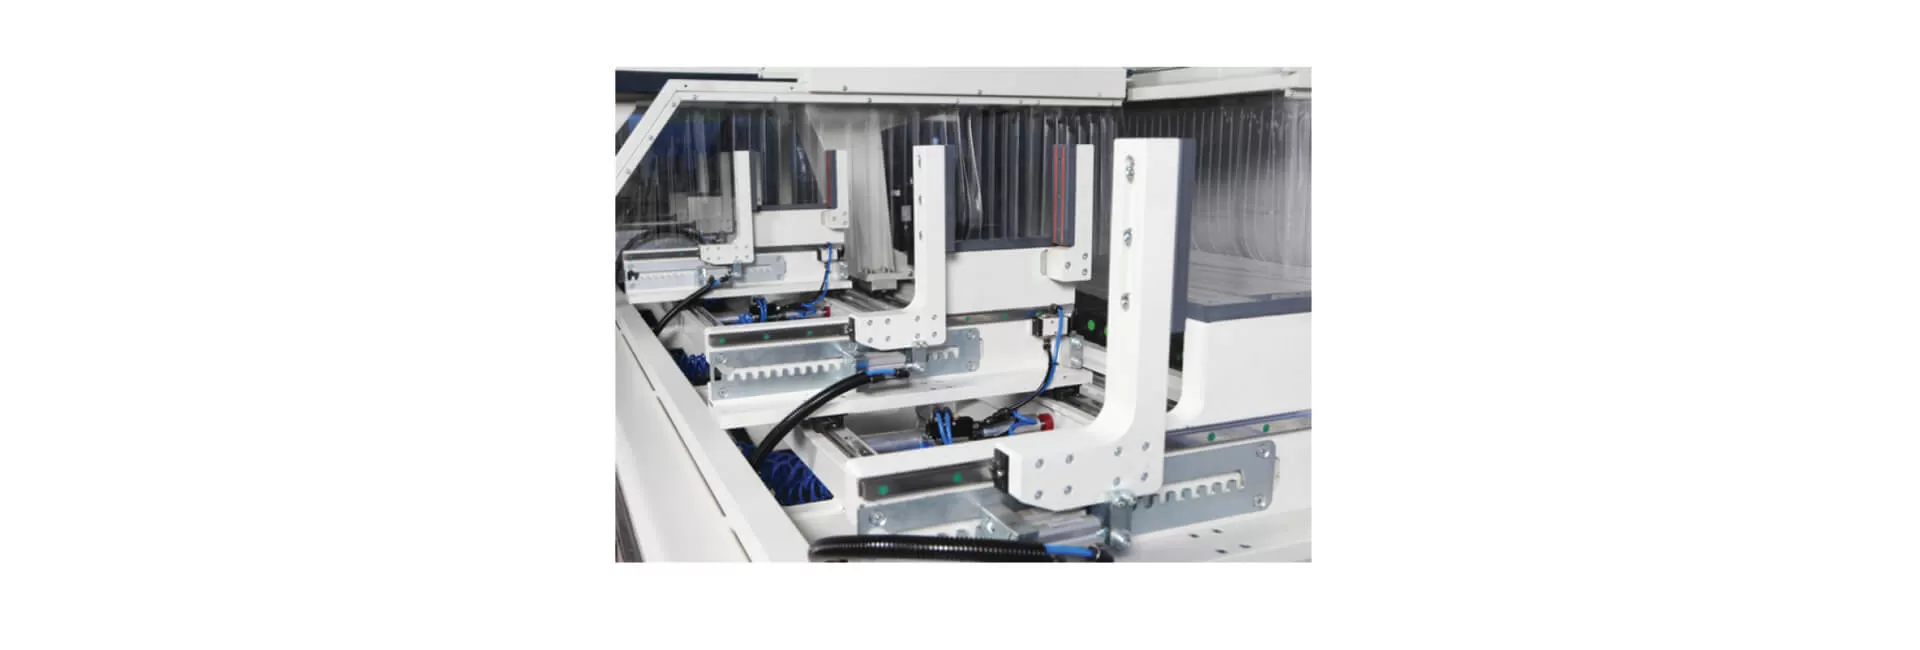 INO XP 7000 3 Axis CNC Profile Machining Center